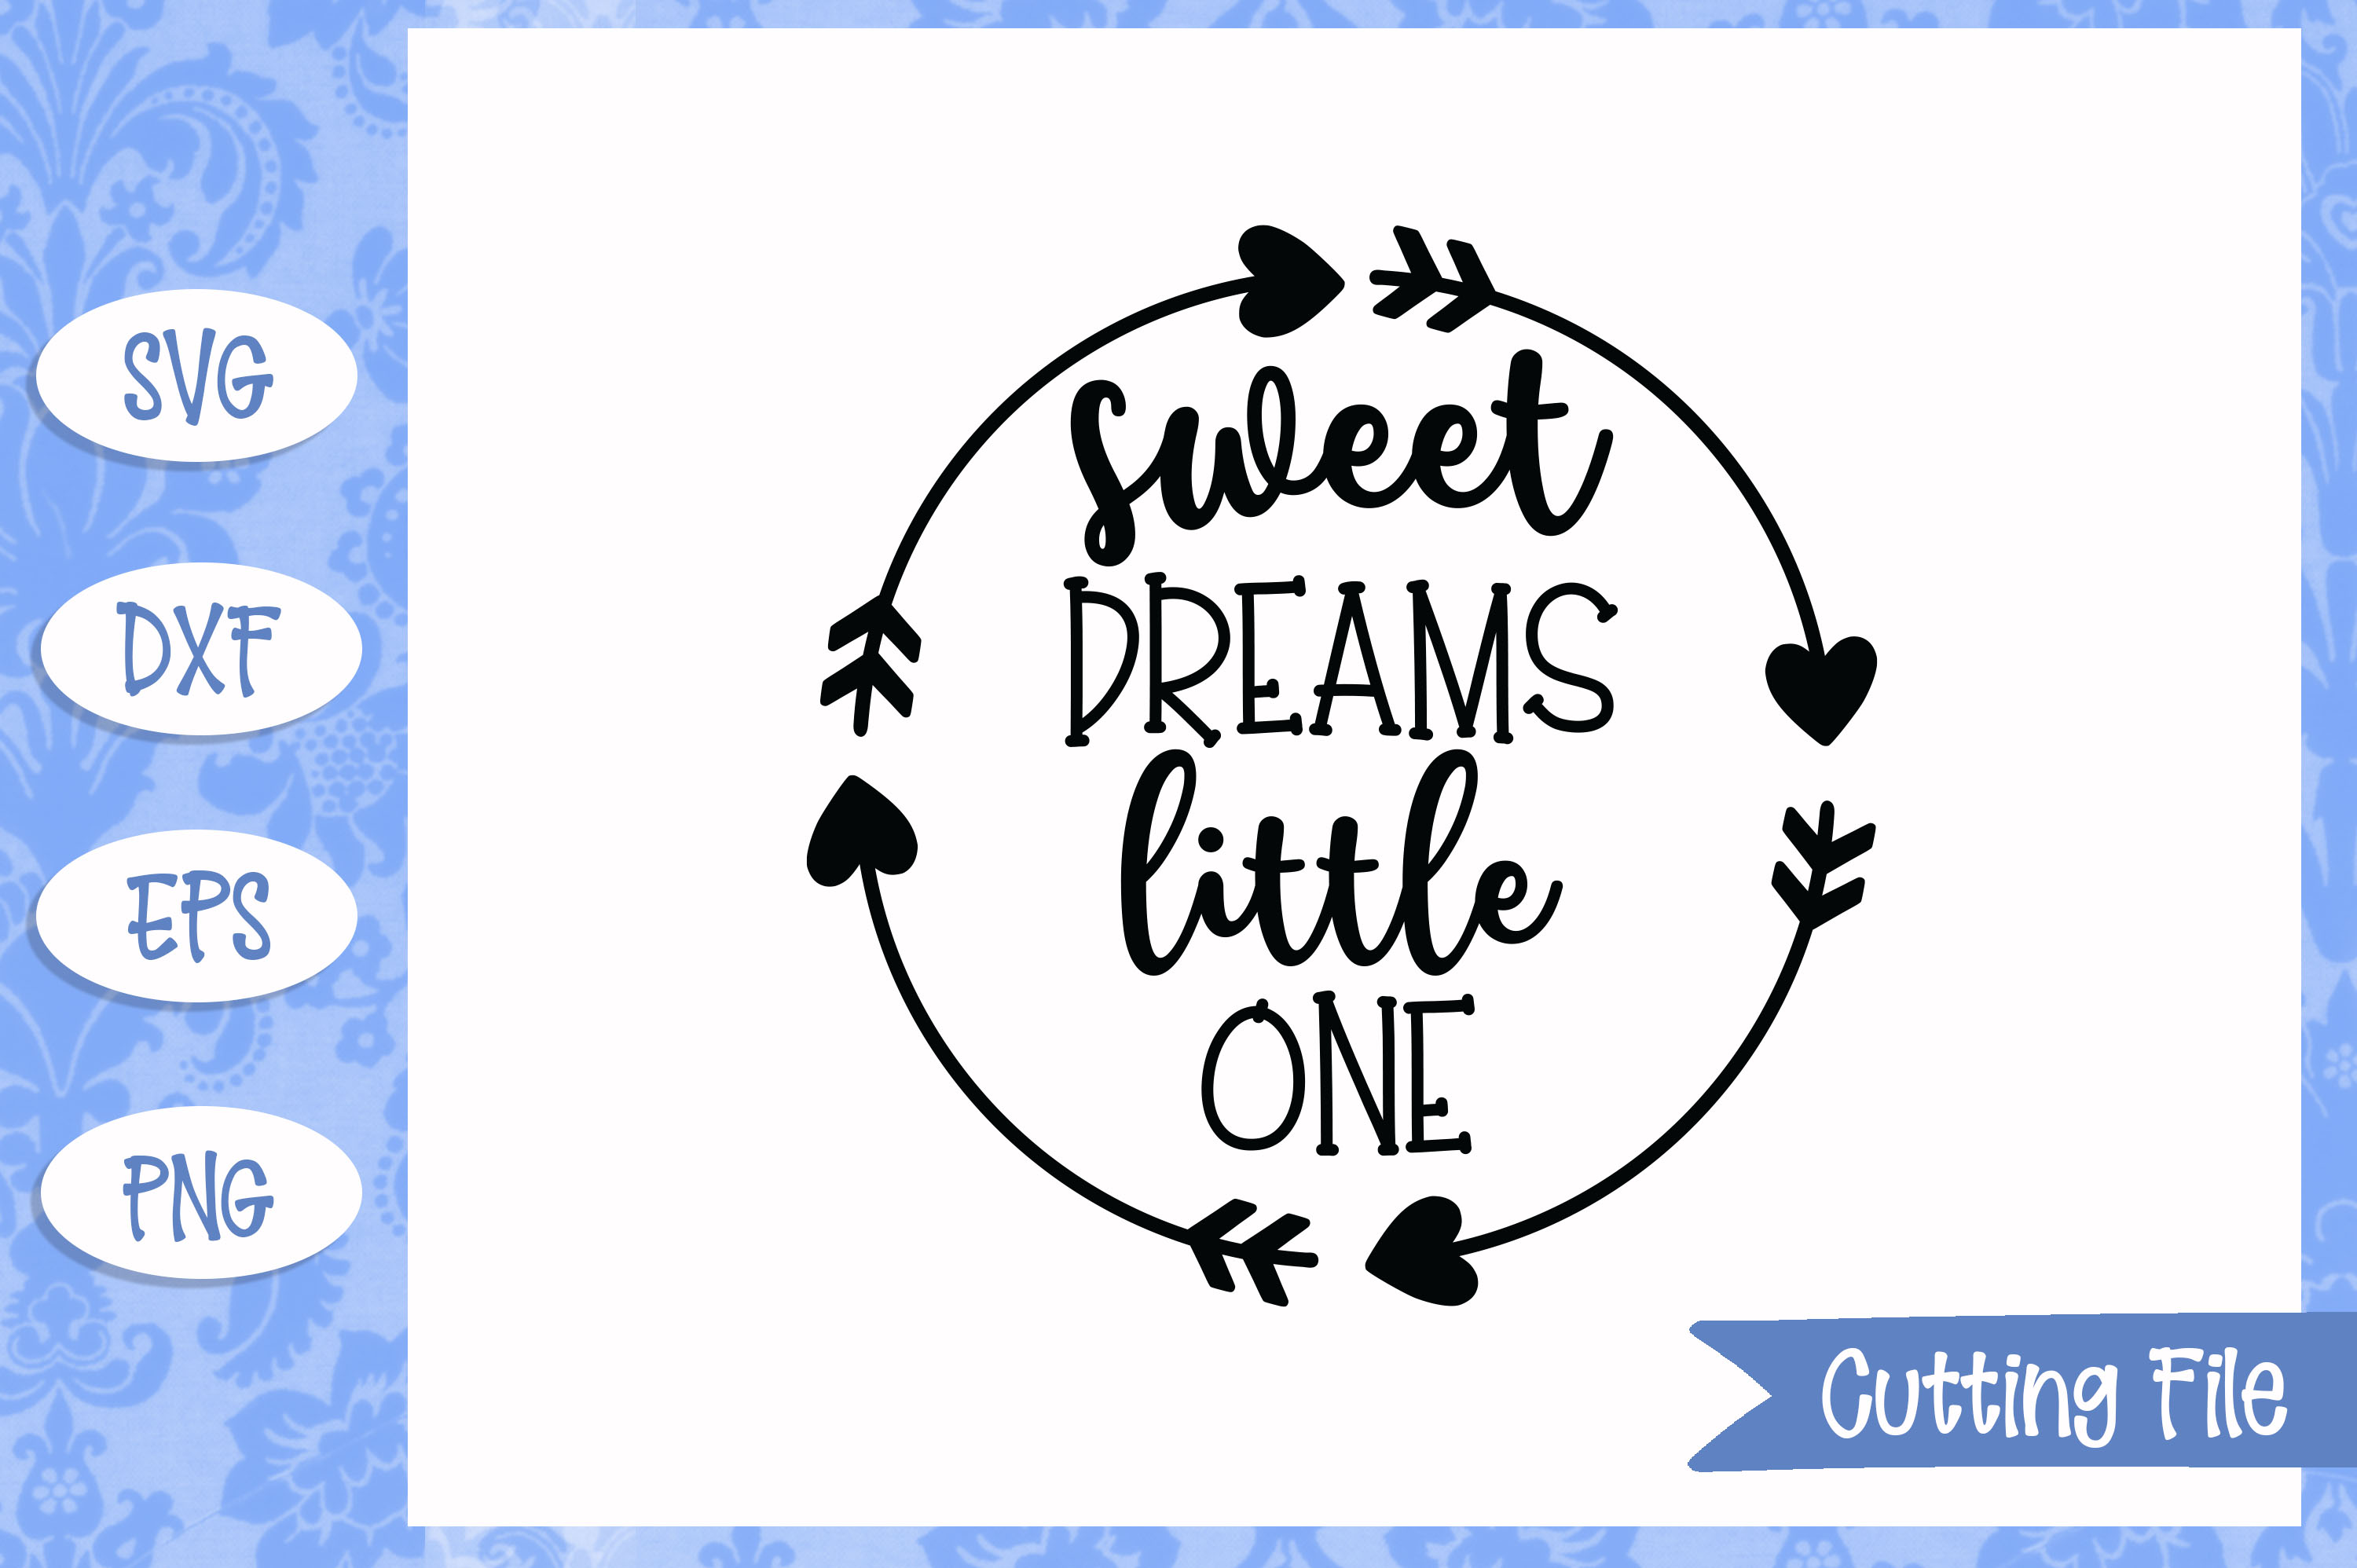 Download Sweet dreams little one SVG File